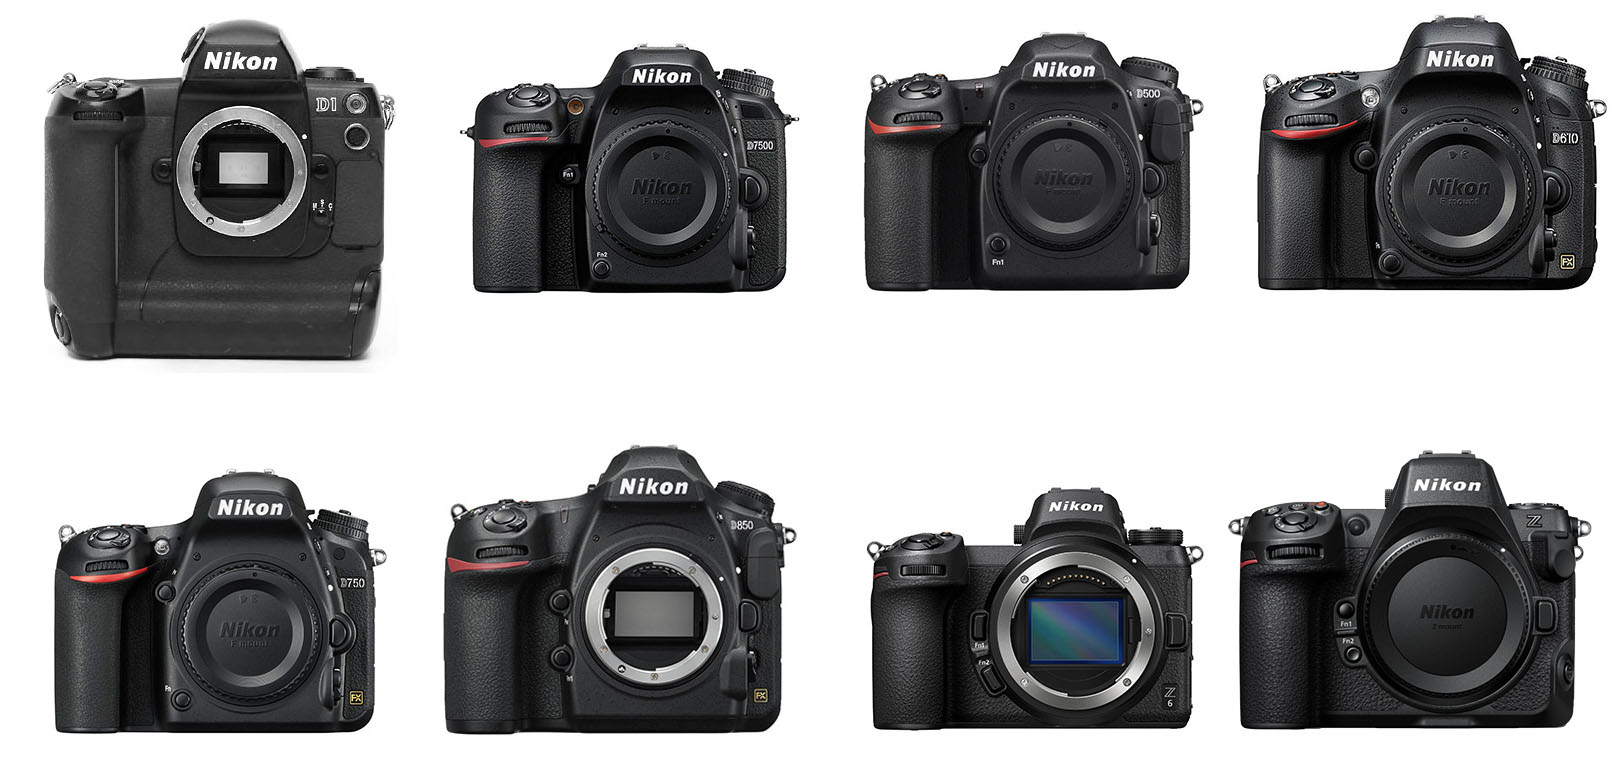 Nikon Professional Digital Cameras